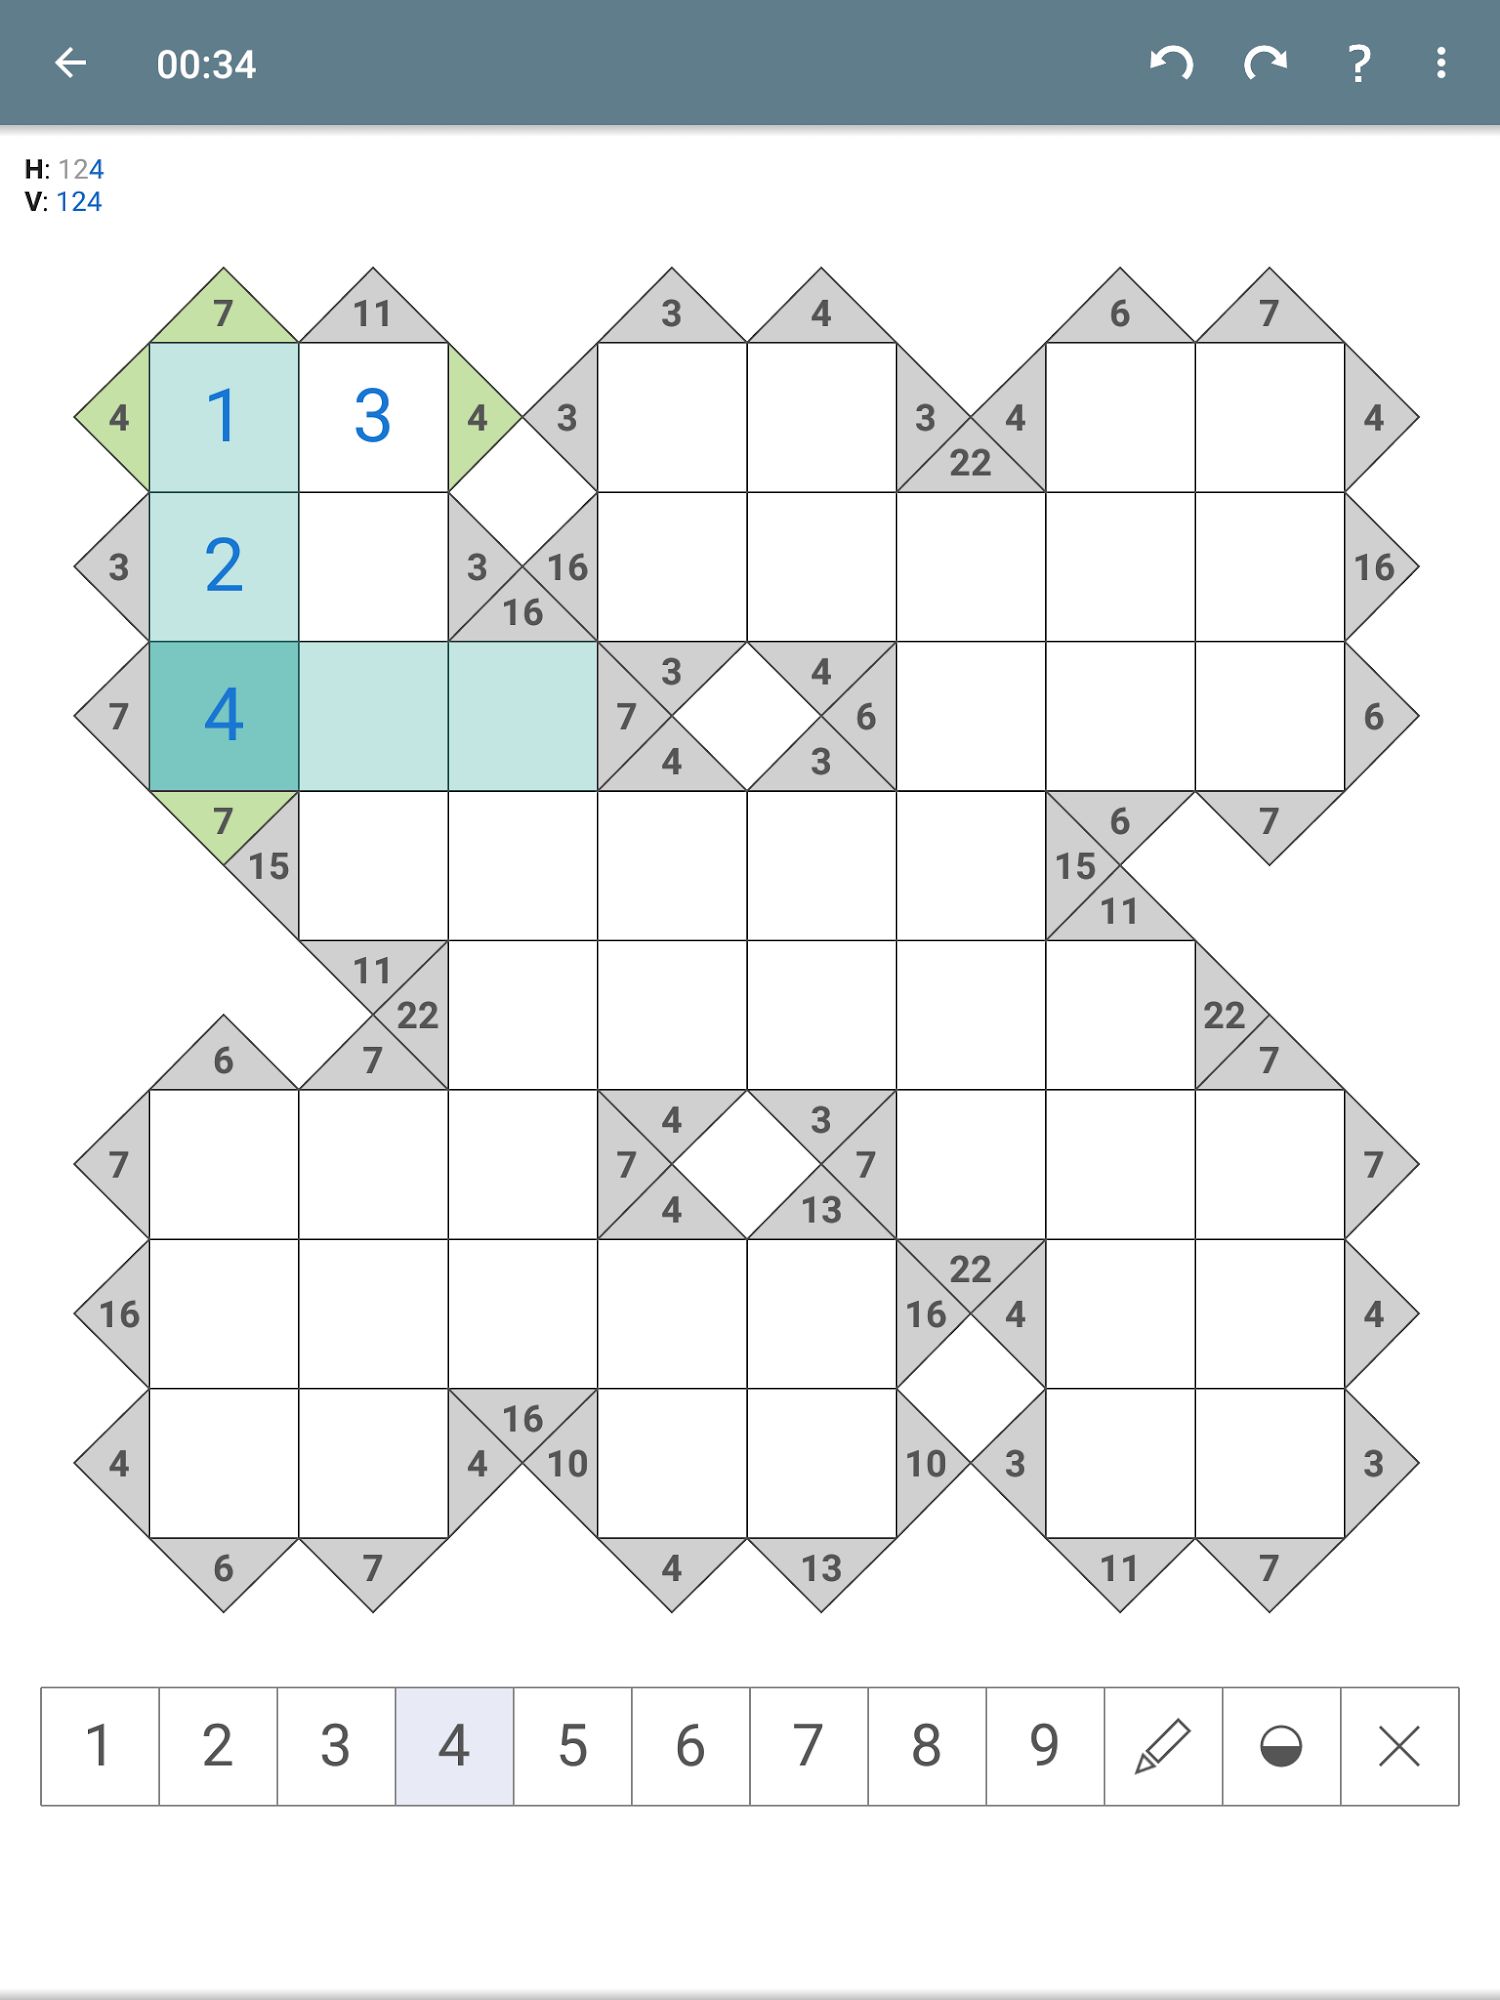 Скачать Kakuro (Cross Sums) - Classic Puzzle Game: Android Головоломки игра на телефон и планшет.